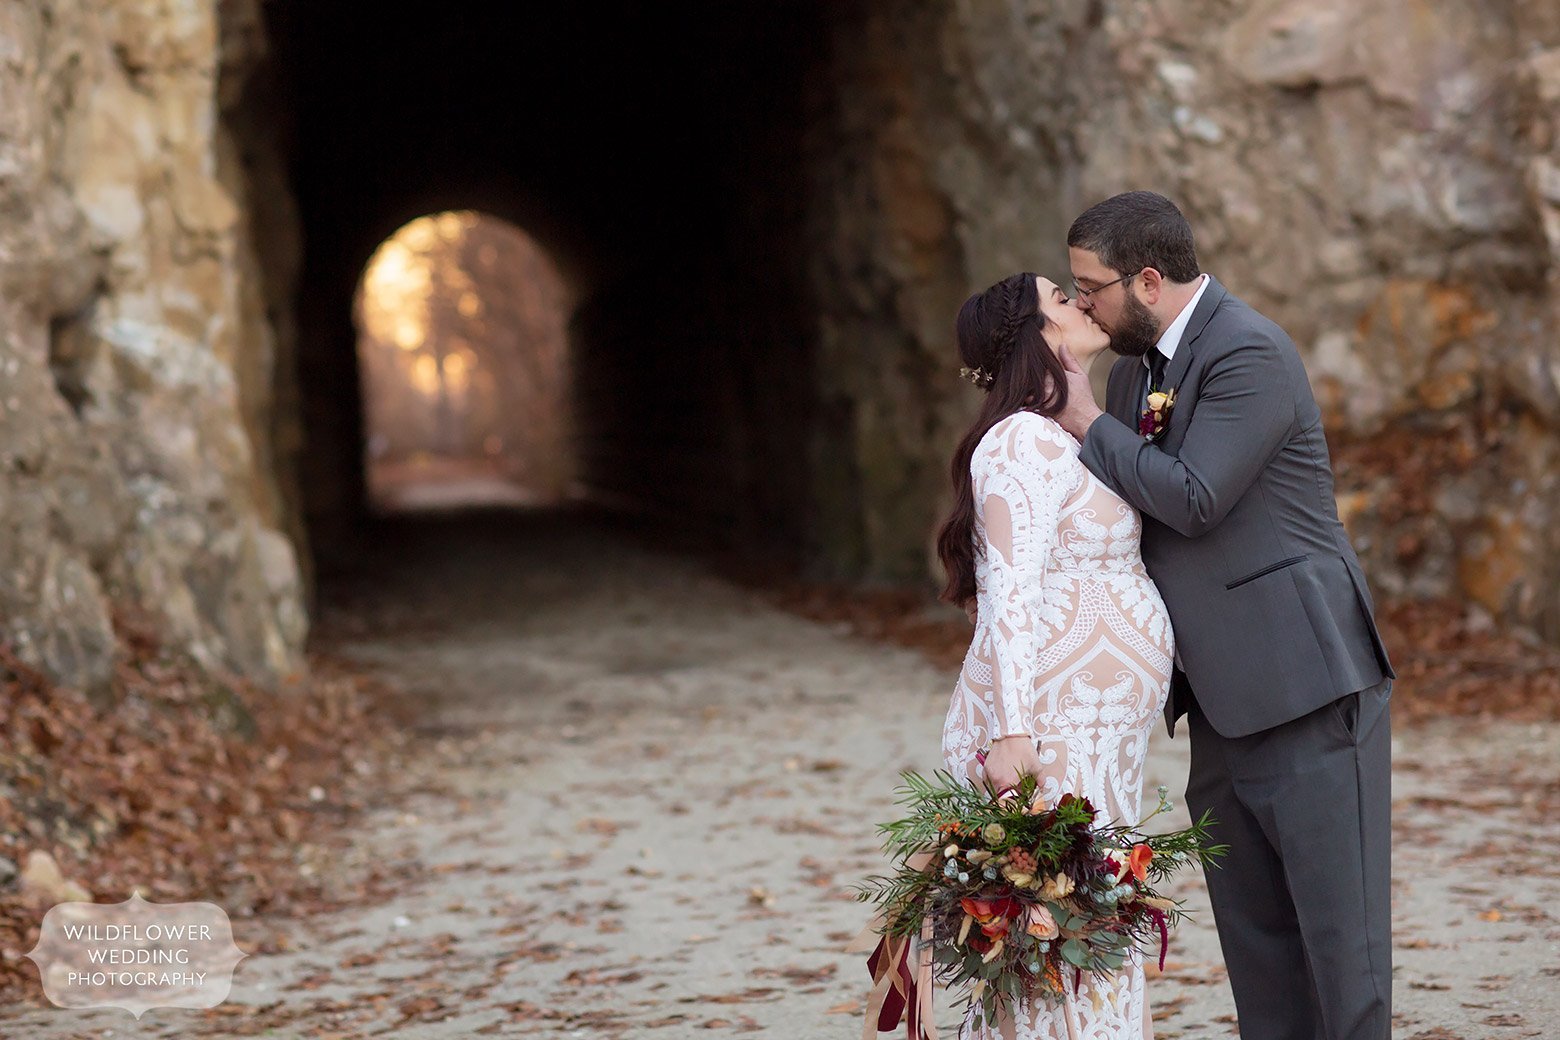 Winter wedding elopement in Katy Trail tunnel in Rocheport, MO.